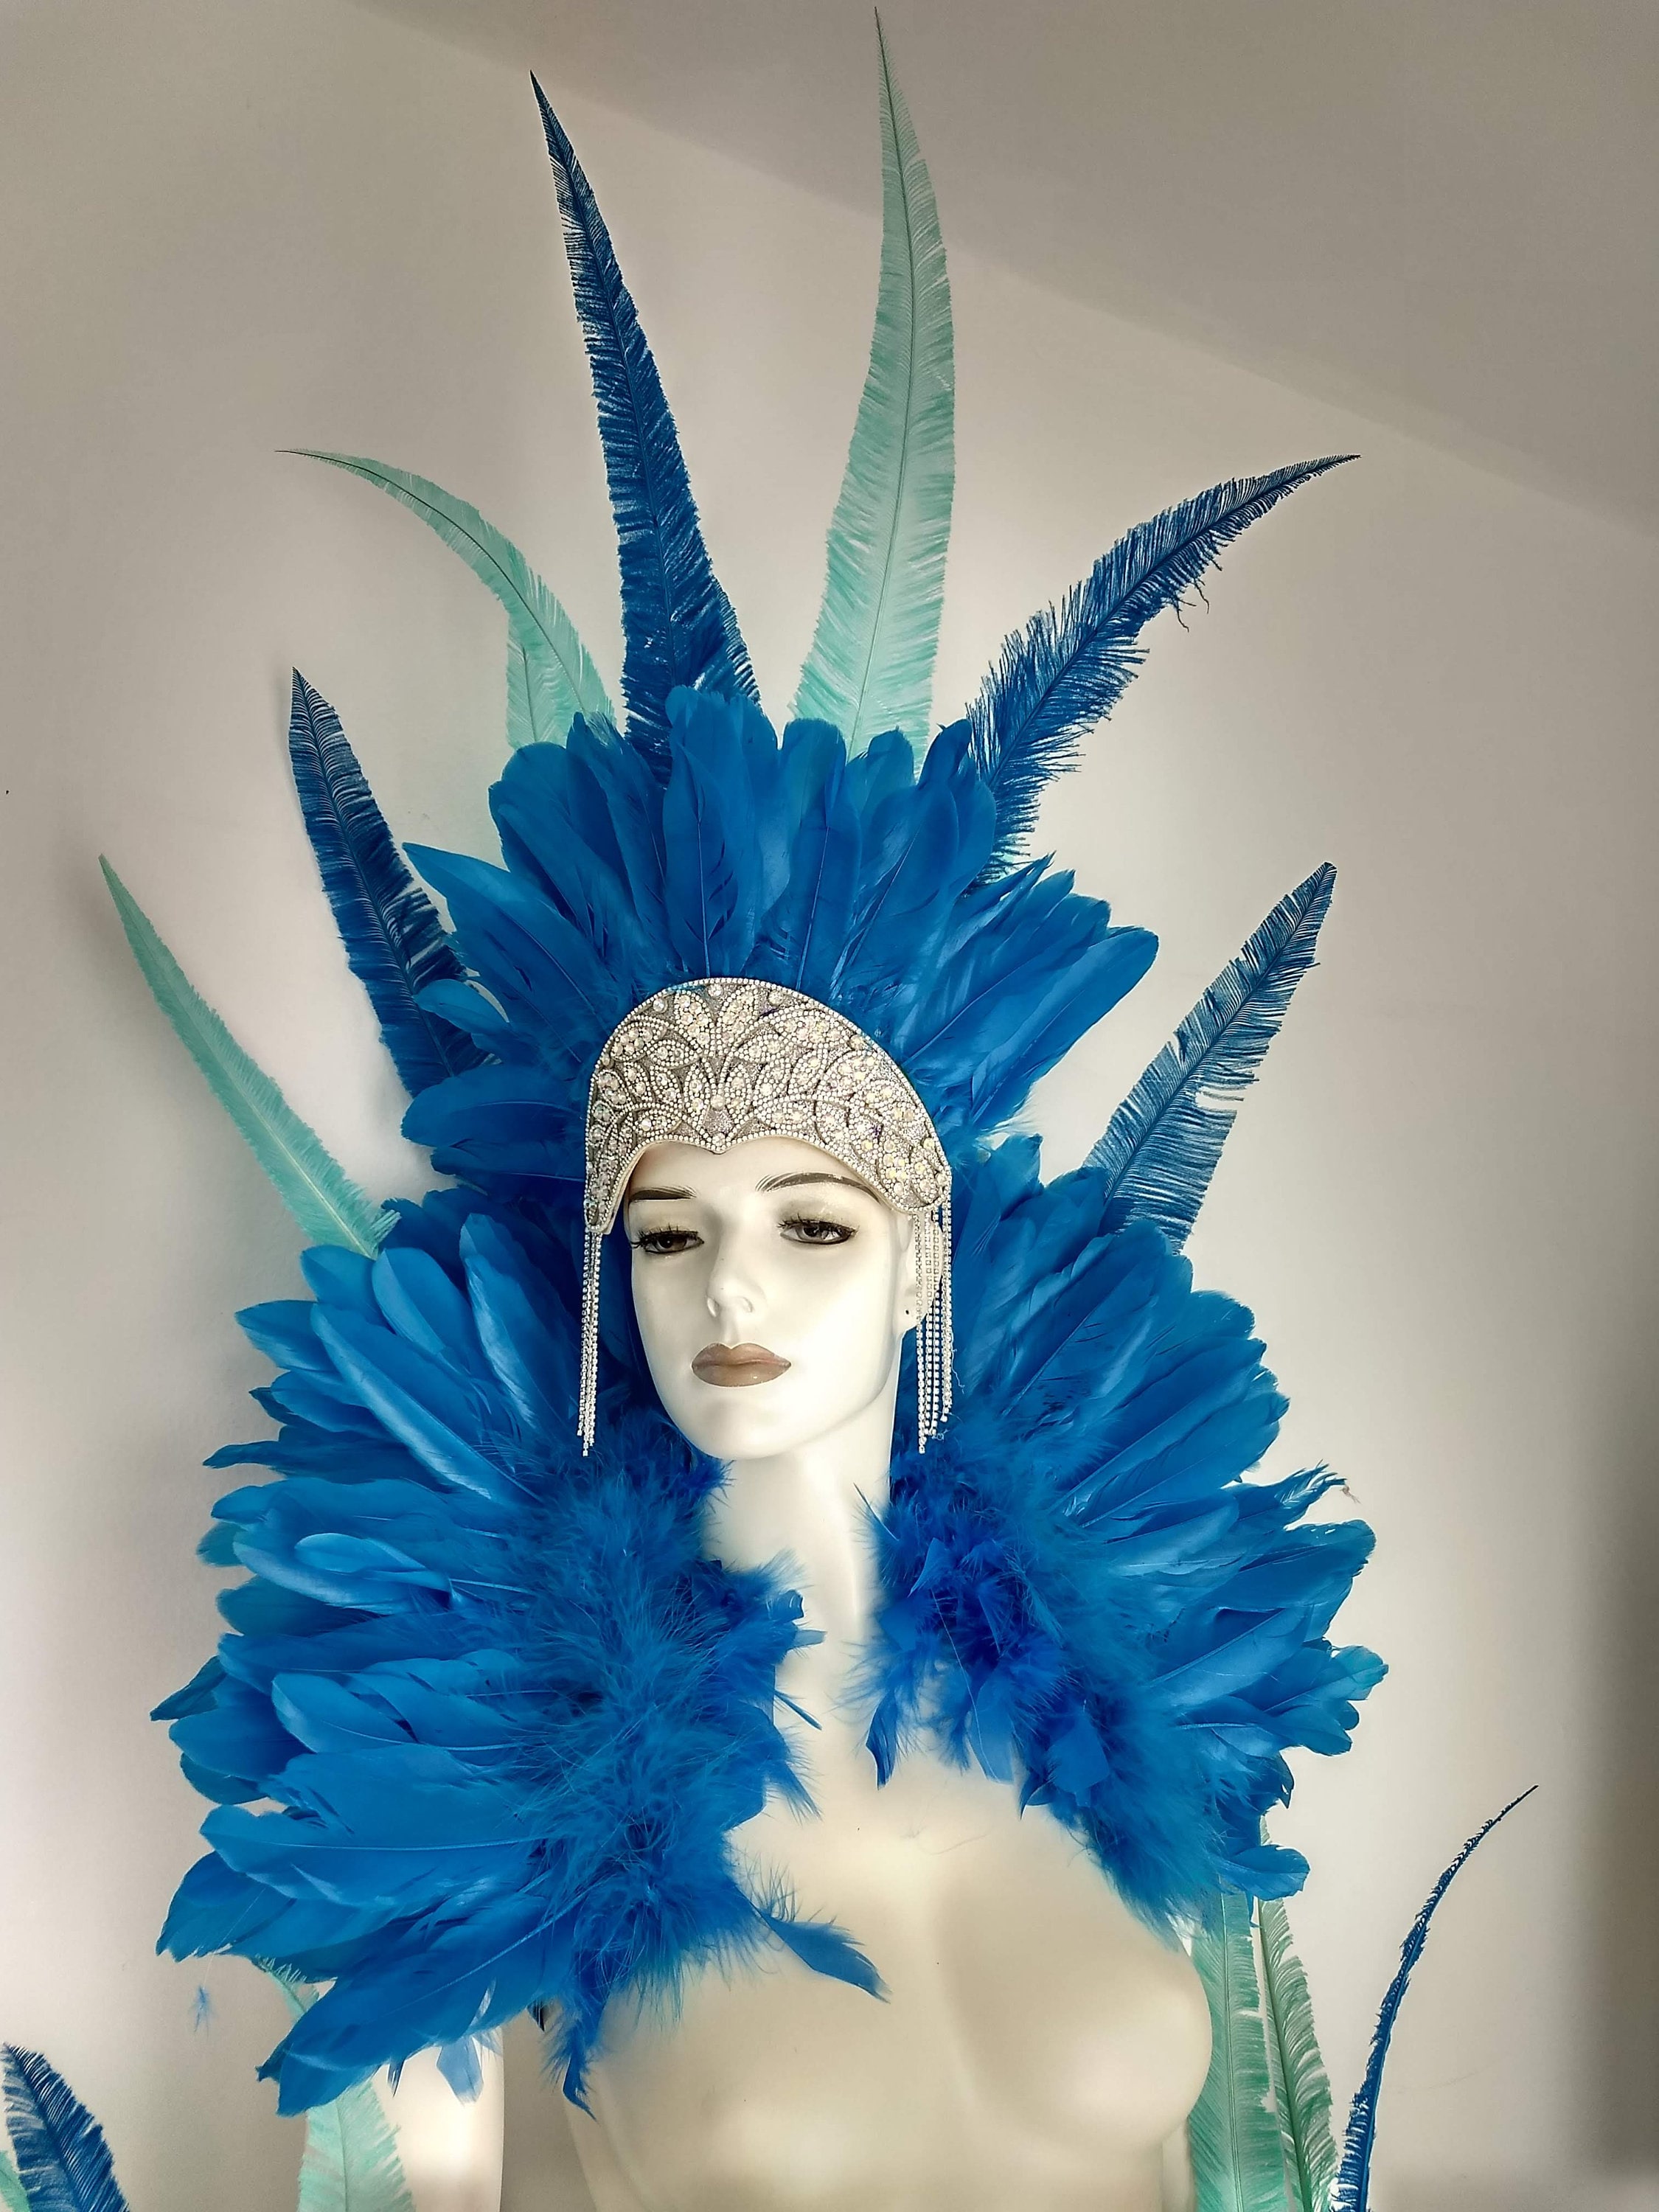 Buy Peacock Carnival Costume Feathers Samba Costume Angel Wings